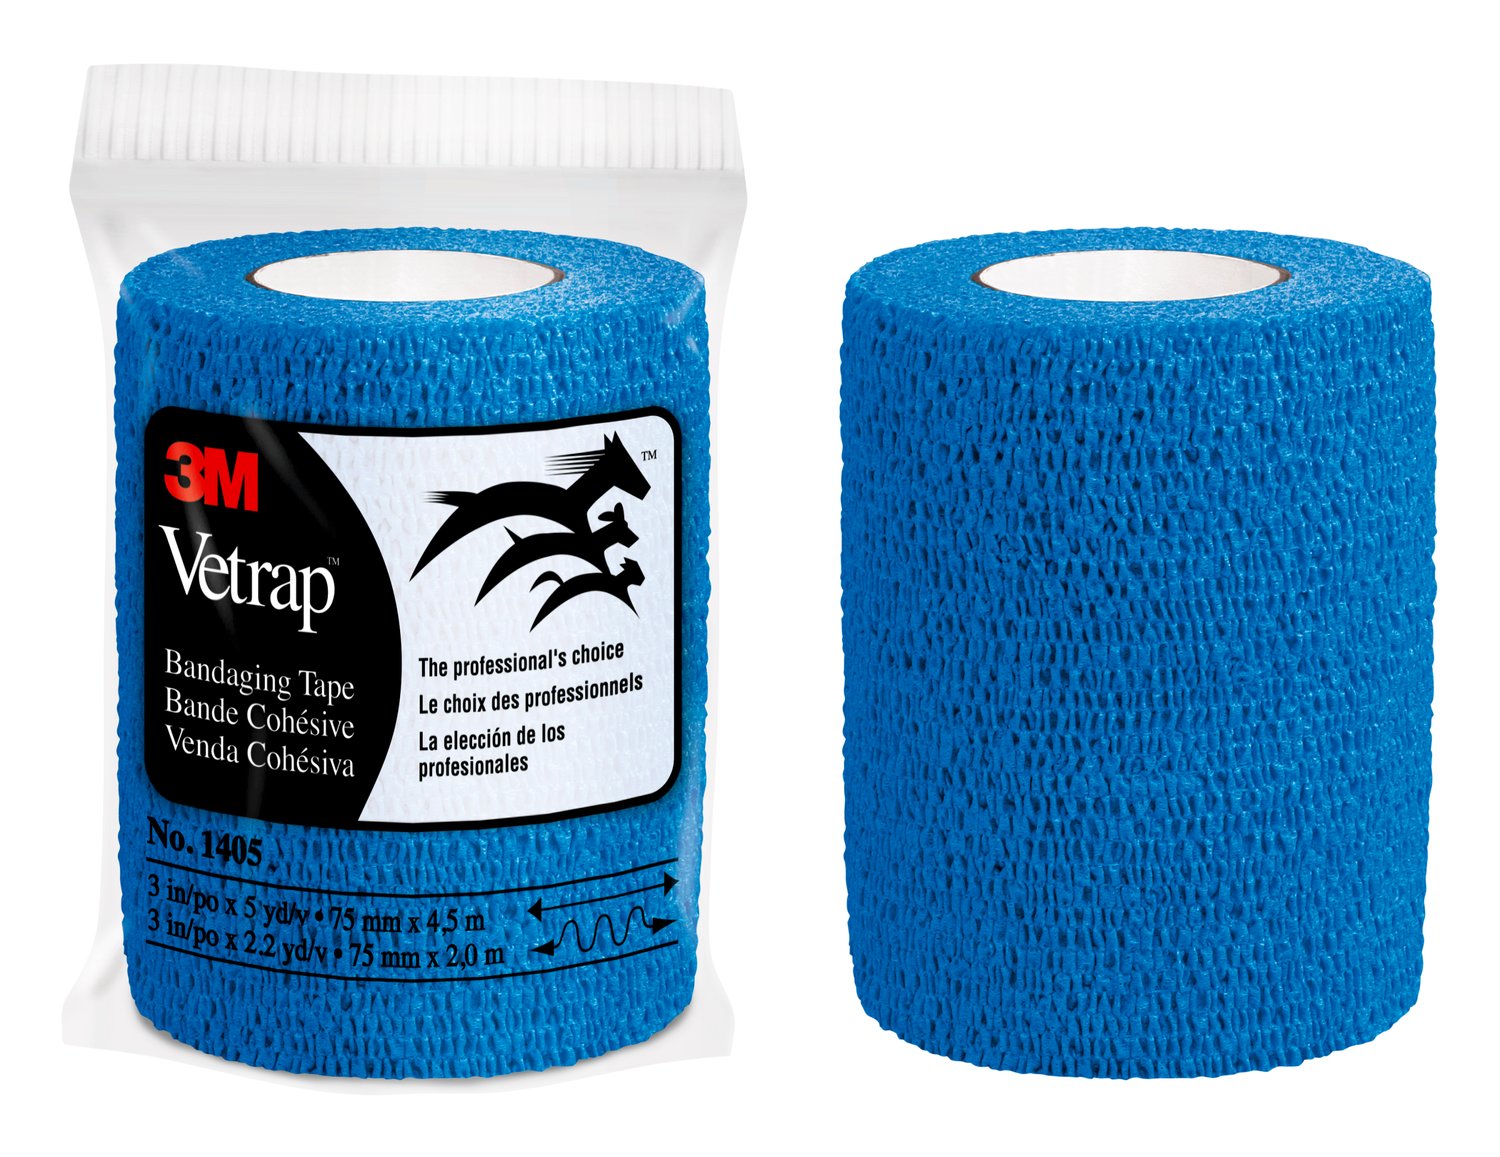 7100032613 - 3M Vetrap Bandaging Tape 1405B BULK, 3 in x 5 yd (75 mm x 4,5 m)